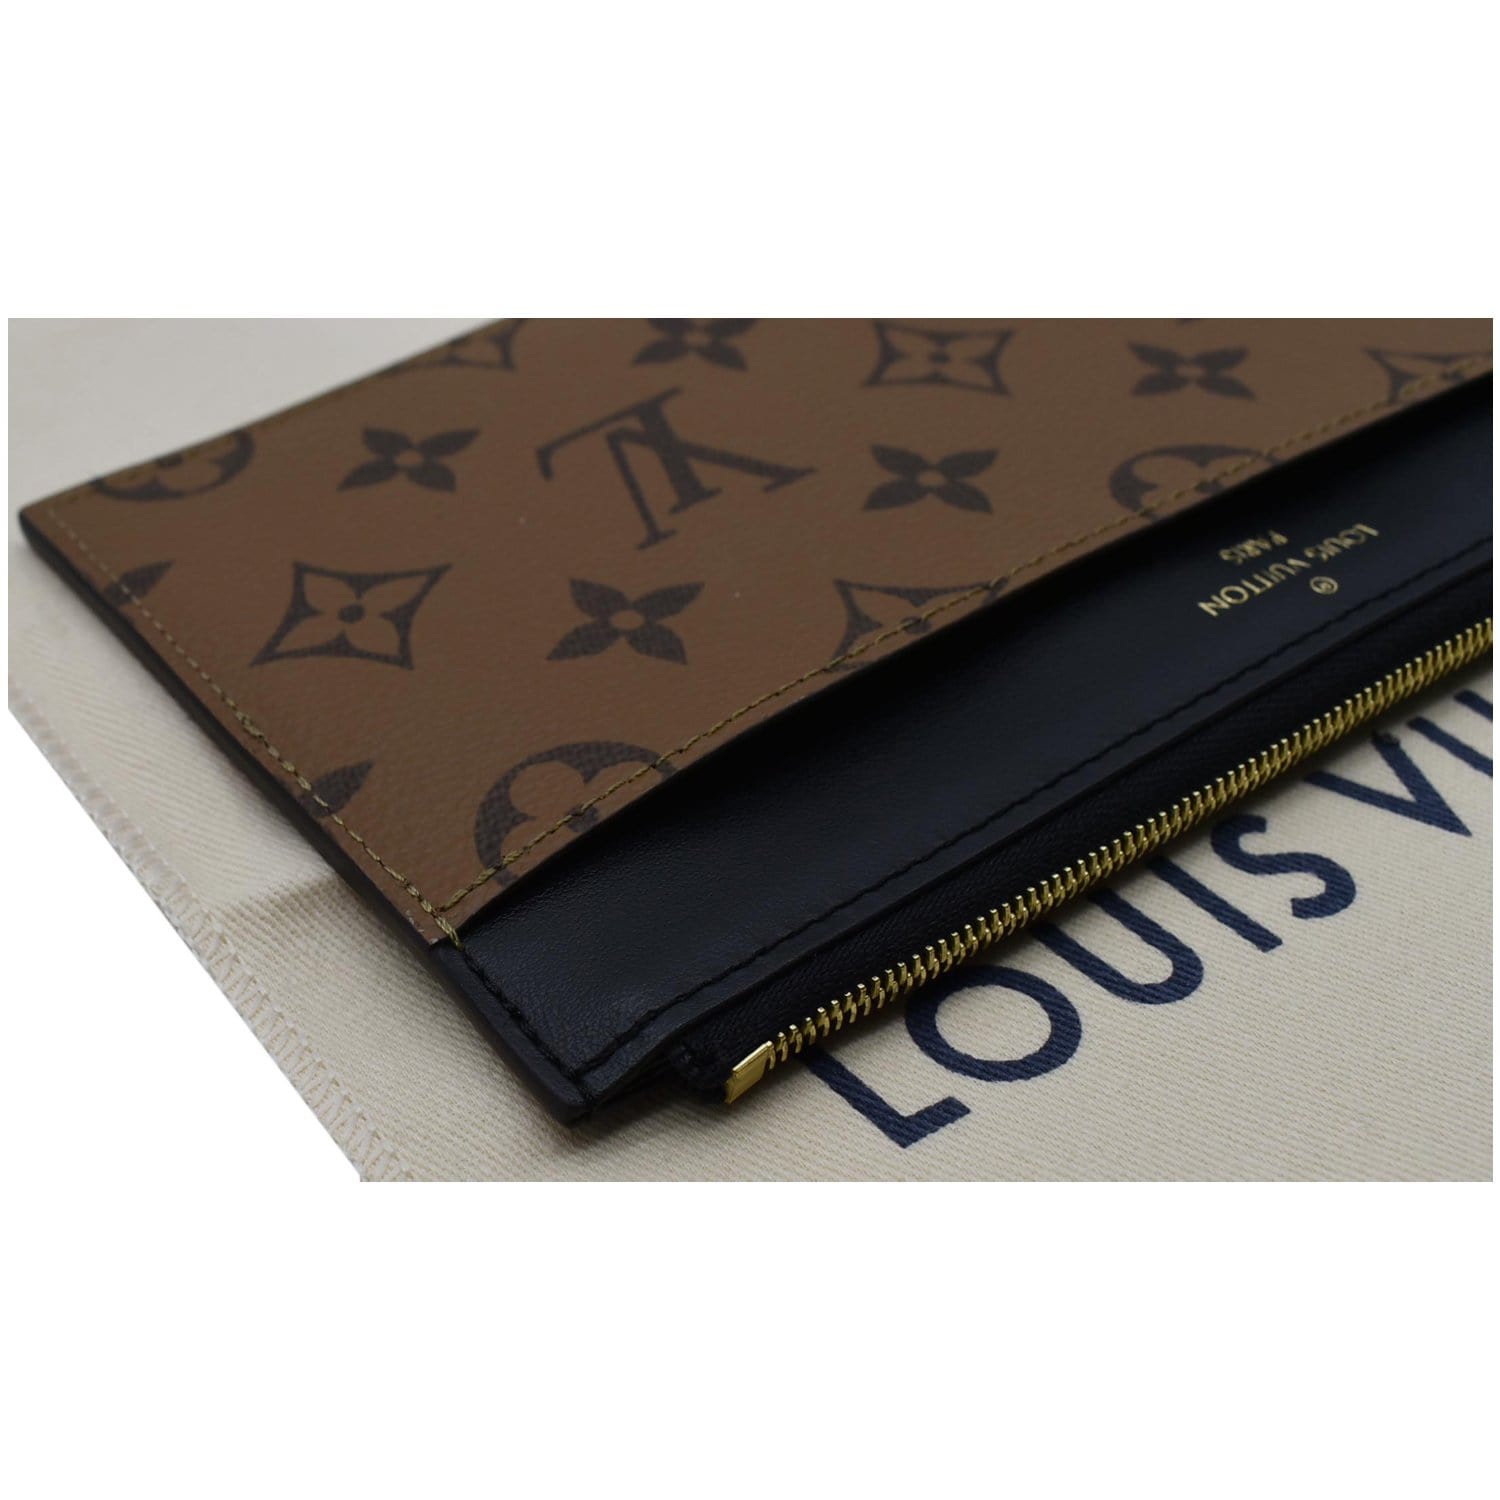 Louis Vuitton SLIM PURSE in Monogram Canvas 